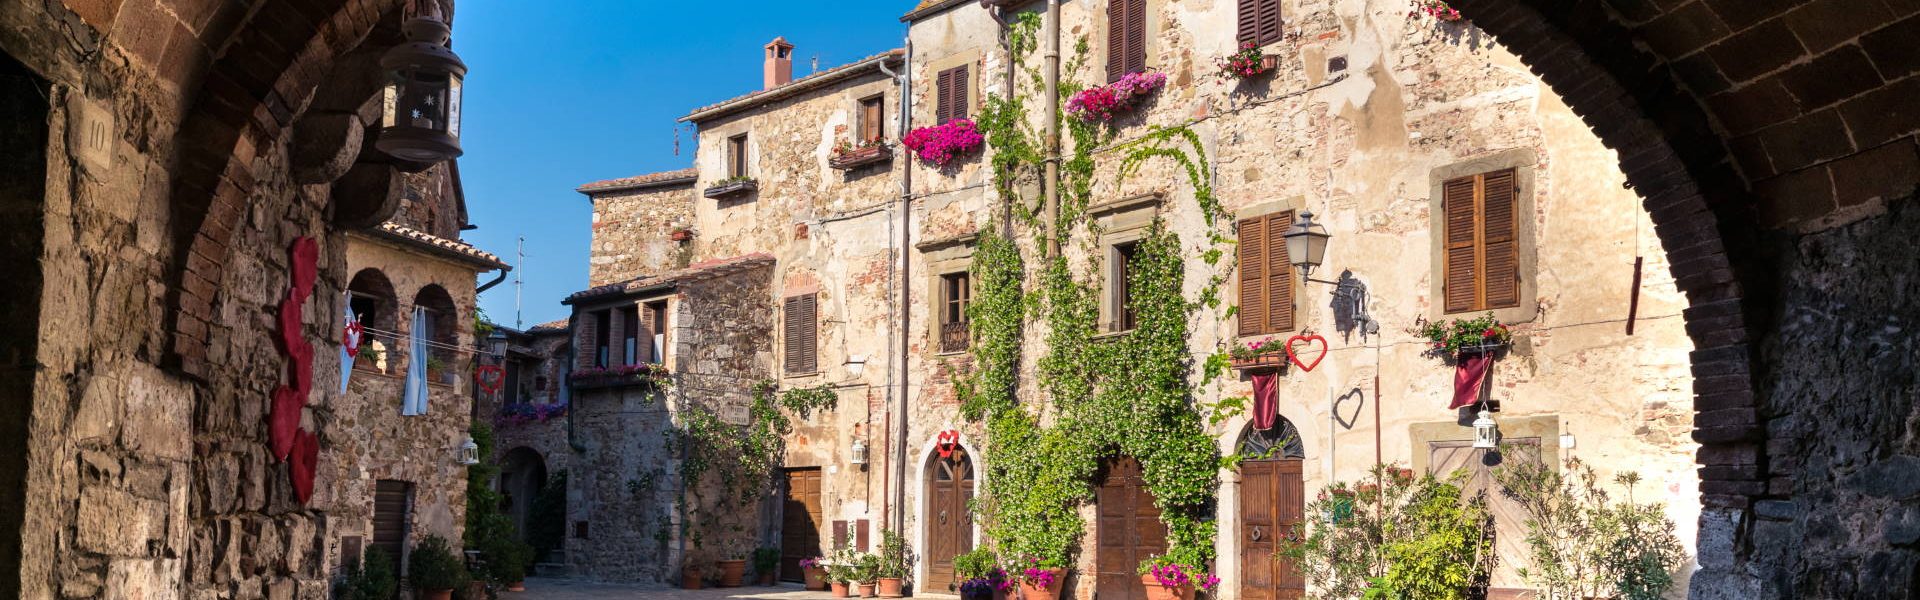 The ancient village of Montemerano, Tuscany, Italy.